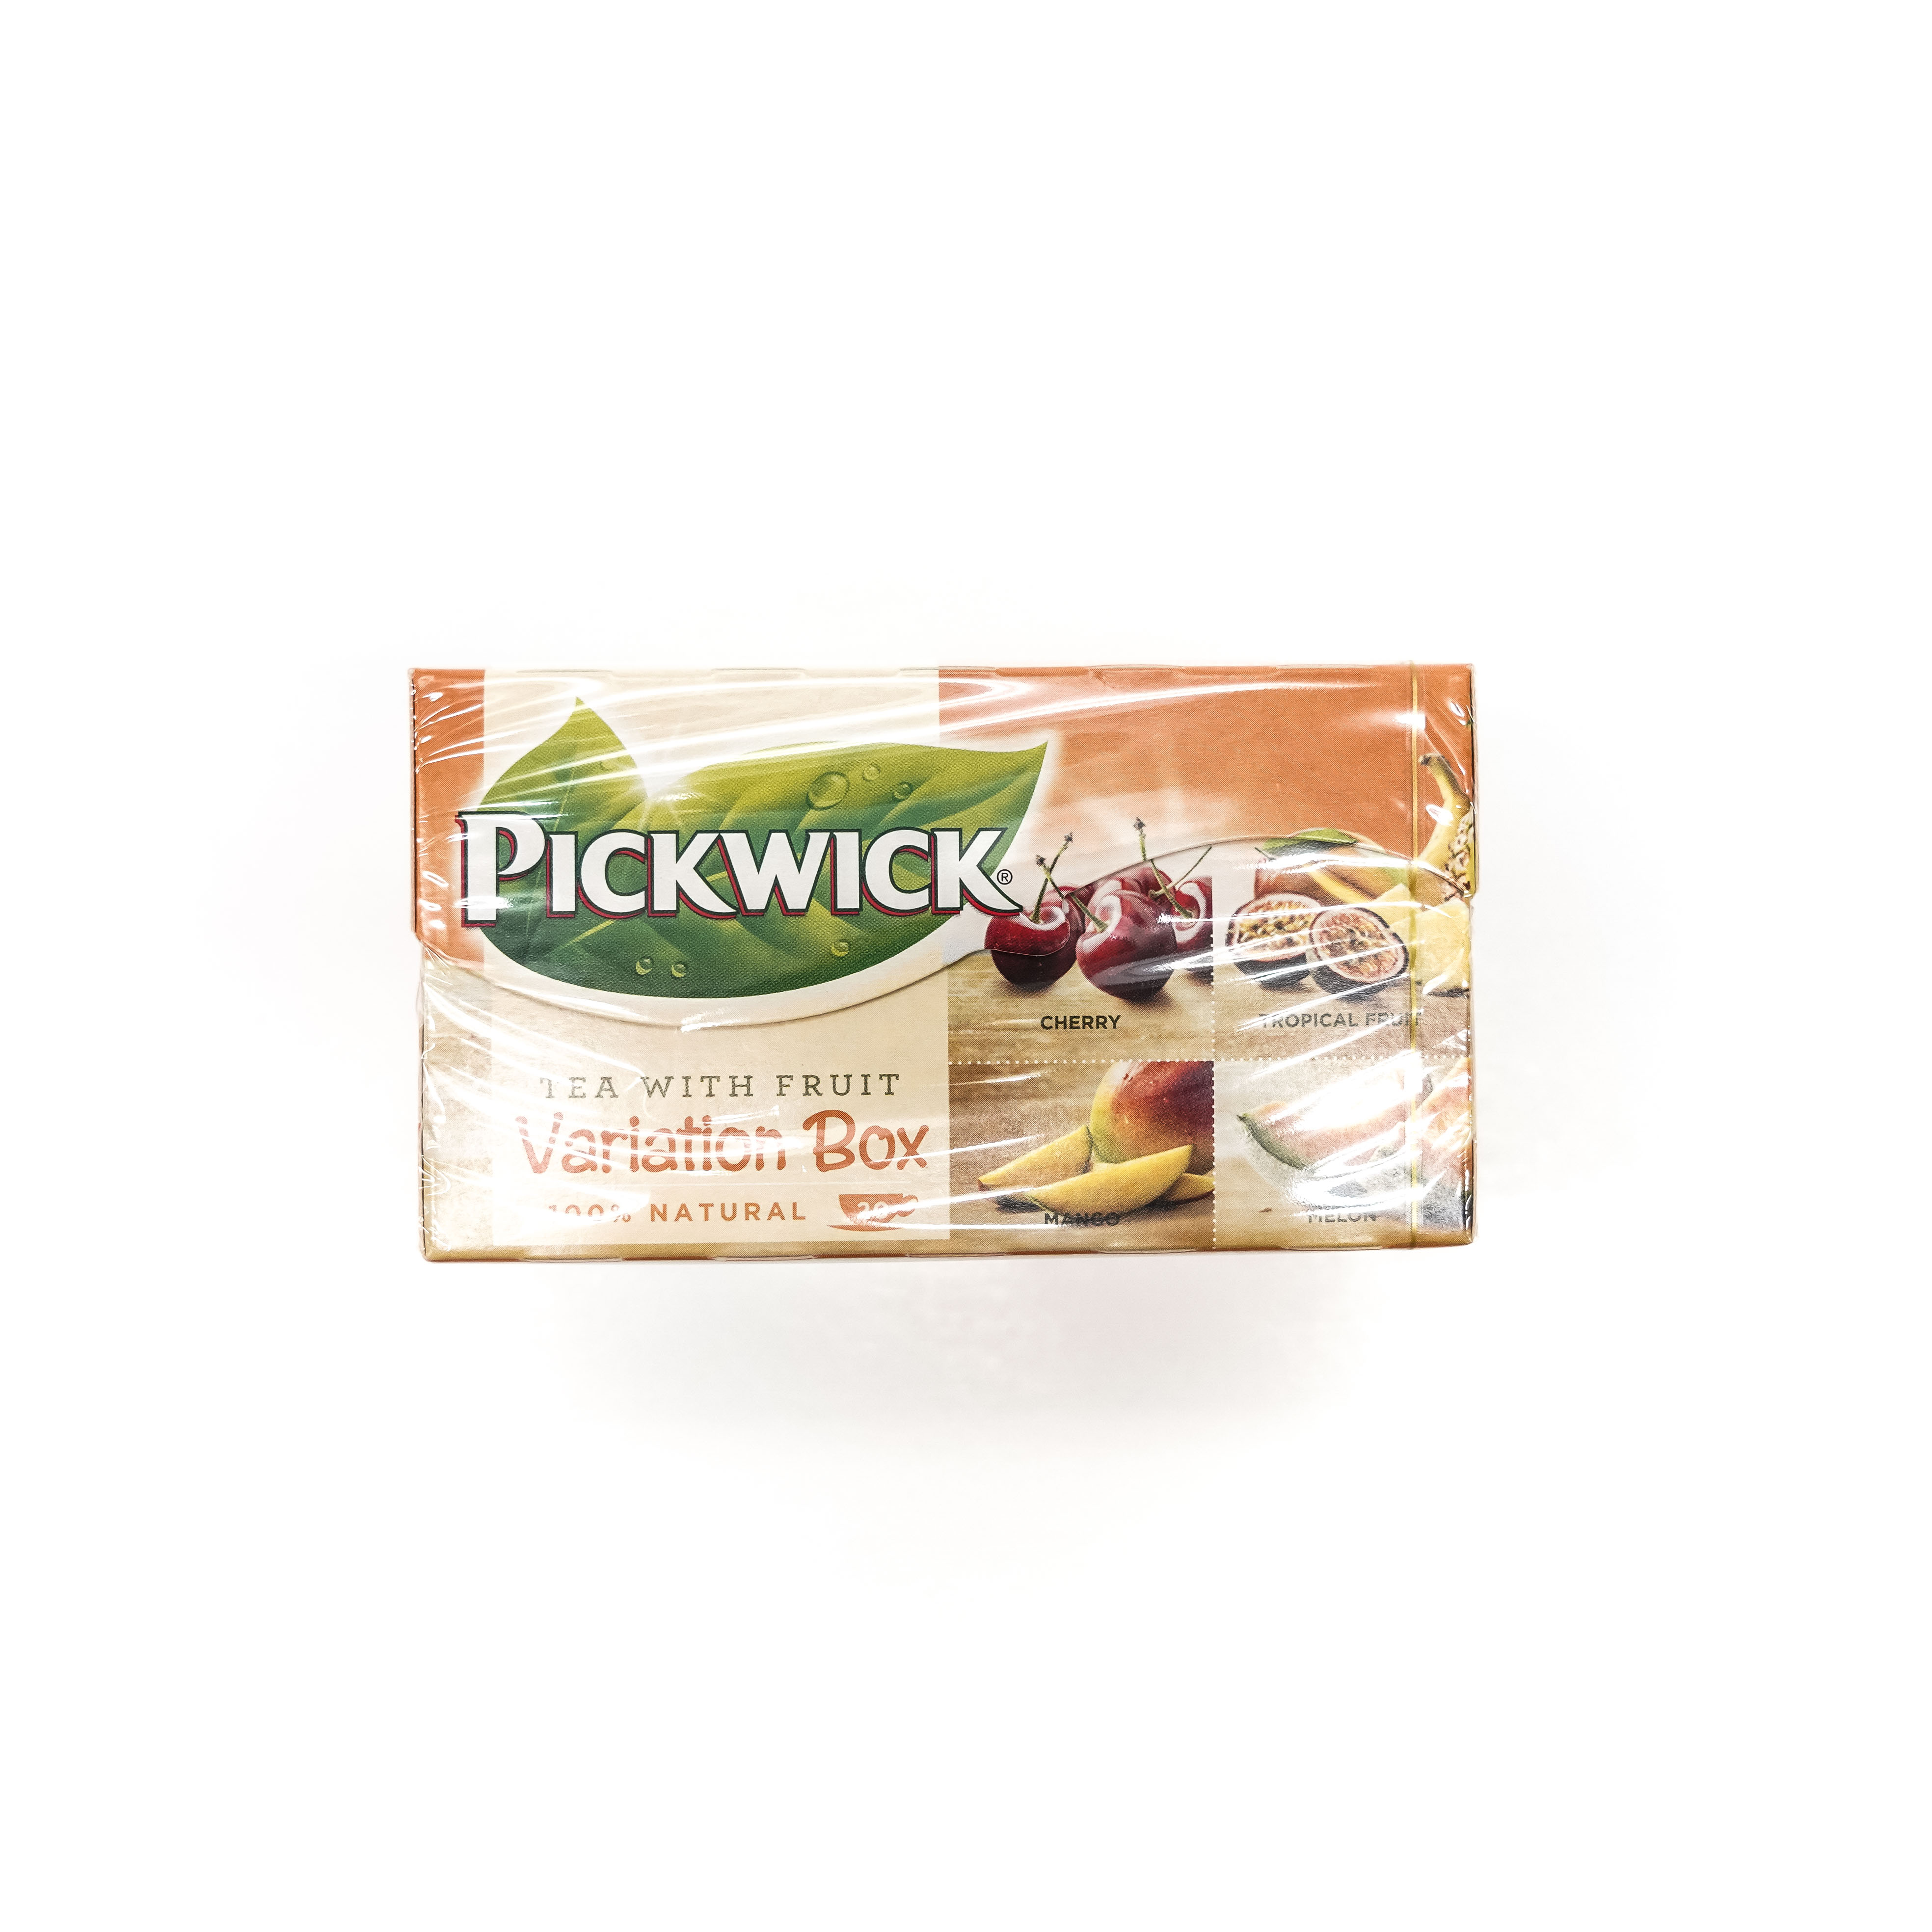 Pickwick Fruit Tea Orange Variation Box